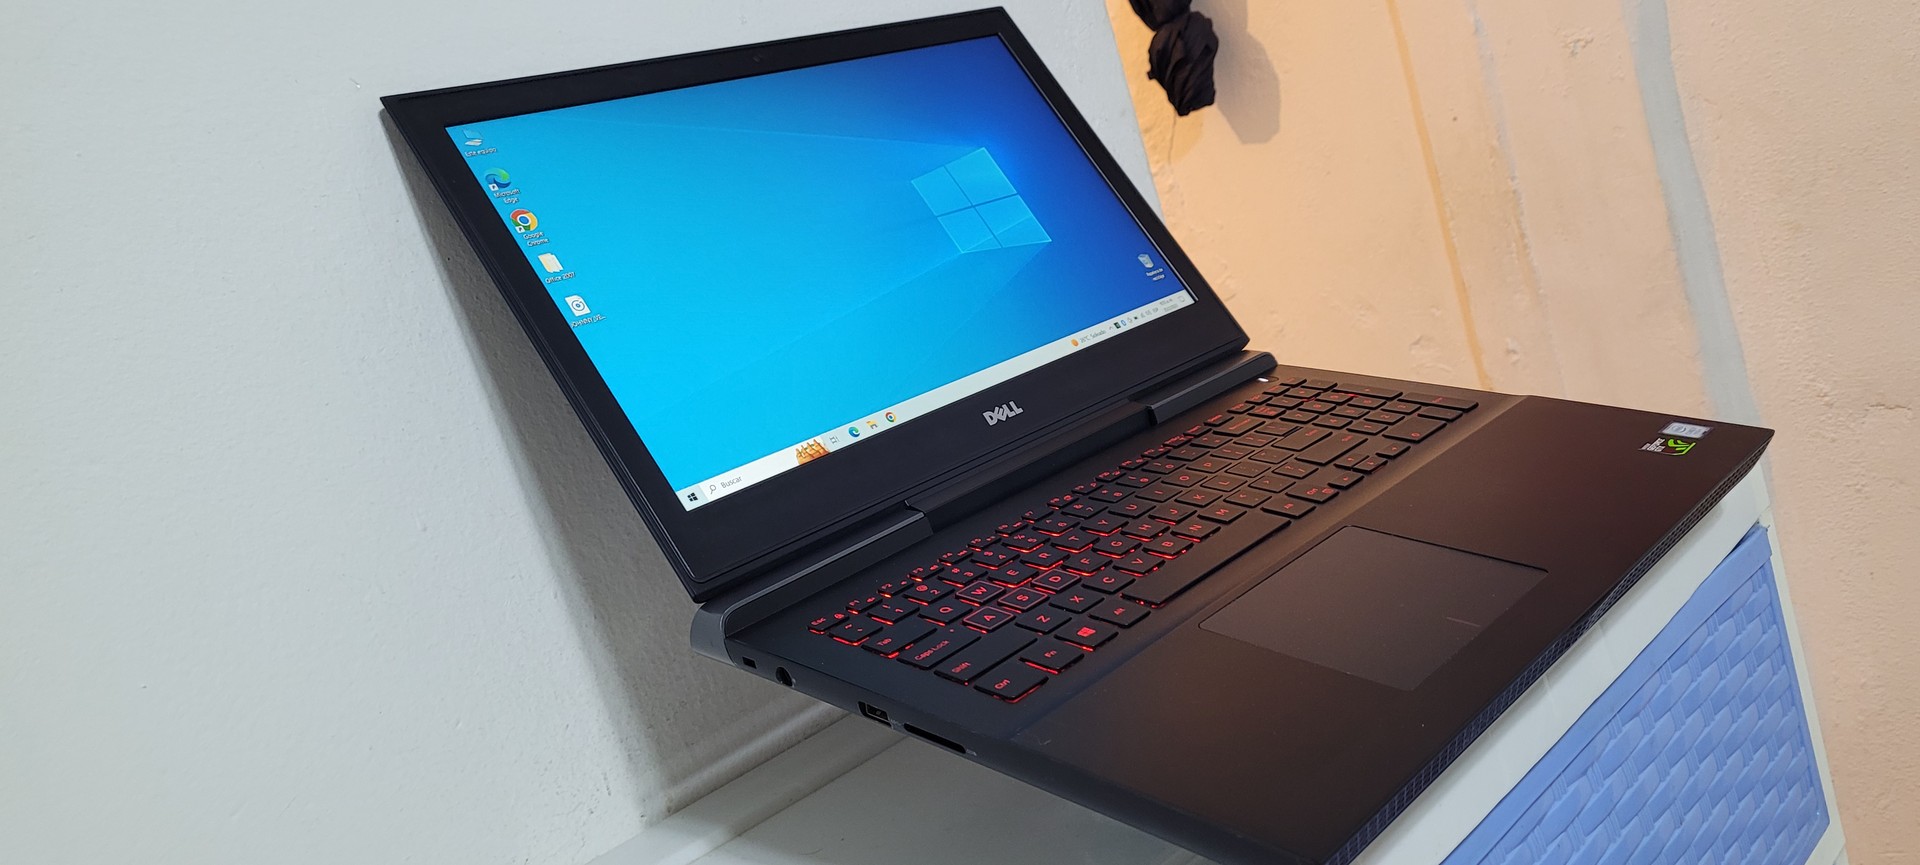 computadoras y laptops - Laptop Dell Gaming Core i7 7ma Ram 16gb Nvidea Gtx 1050Ti 12gb 0